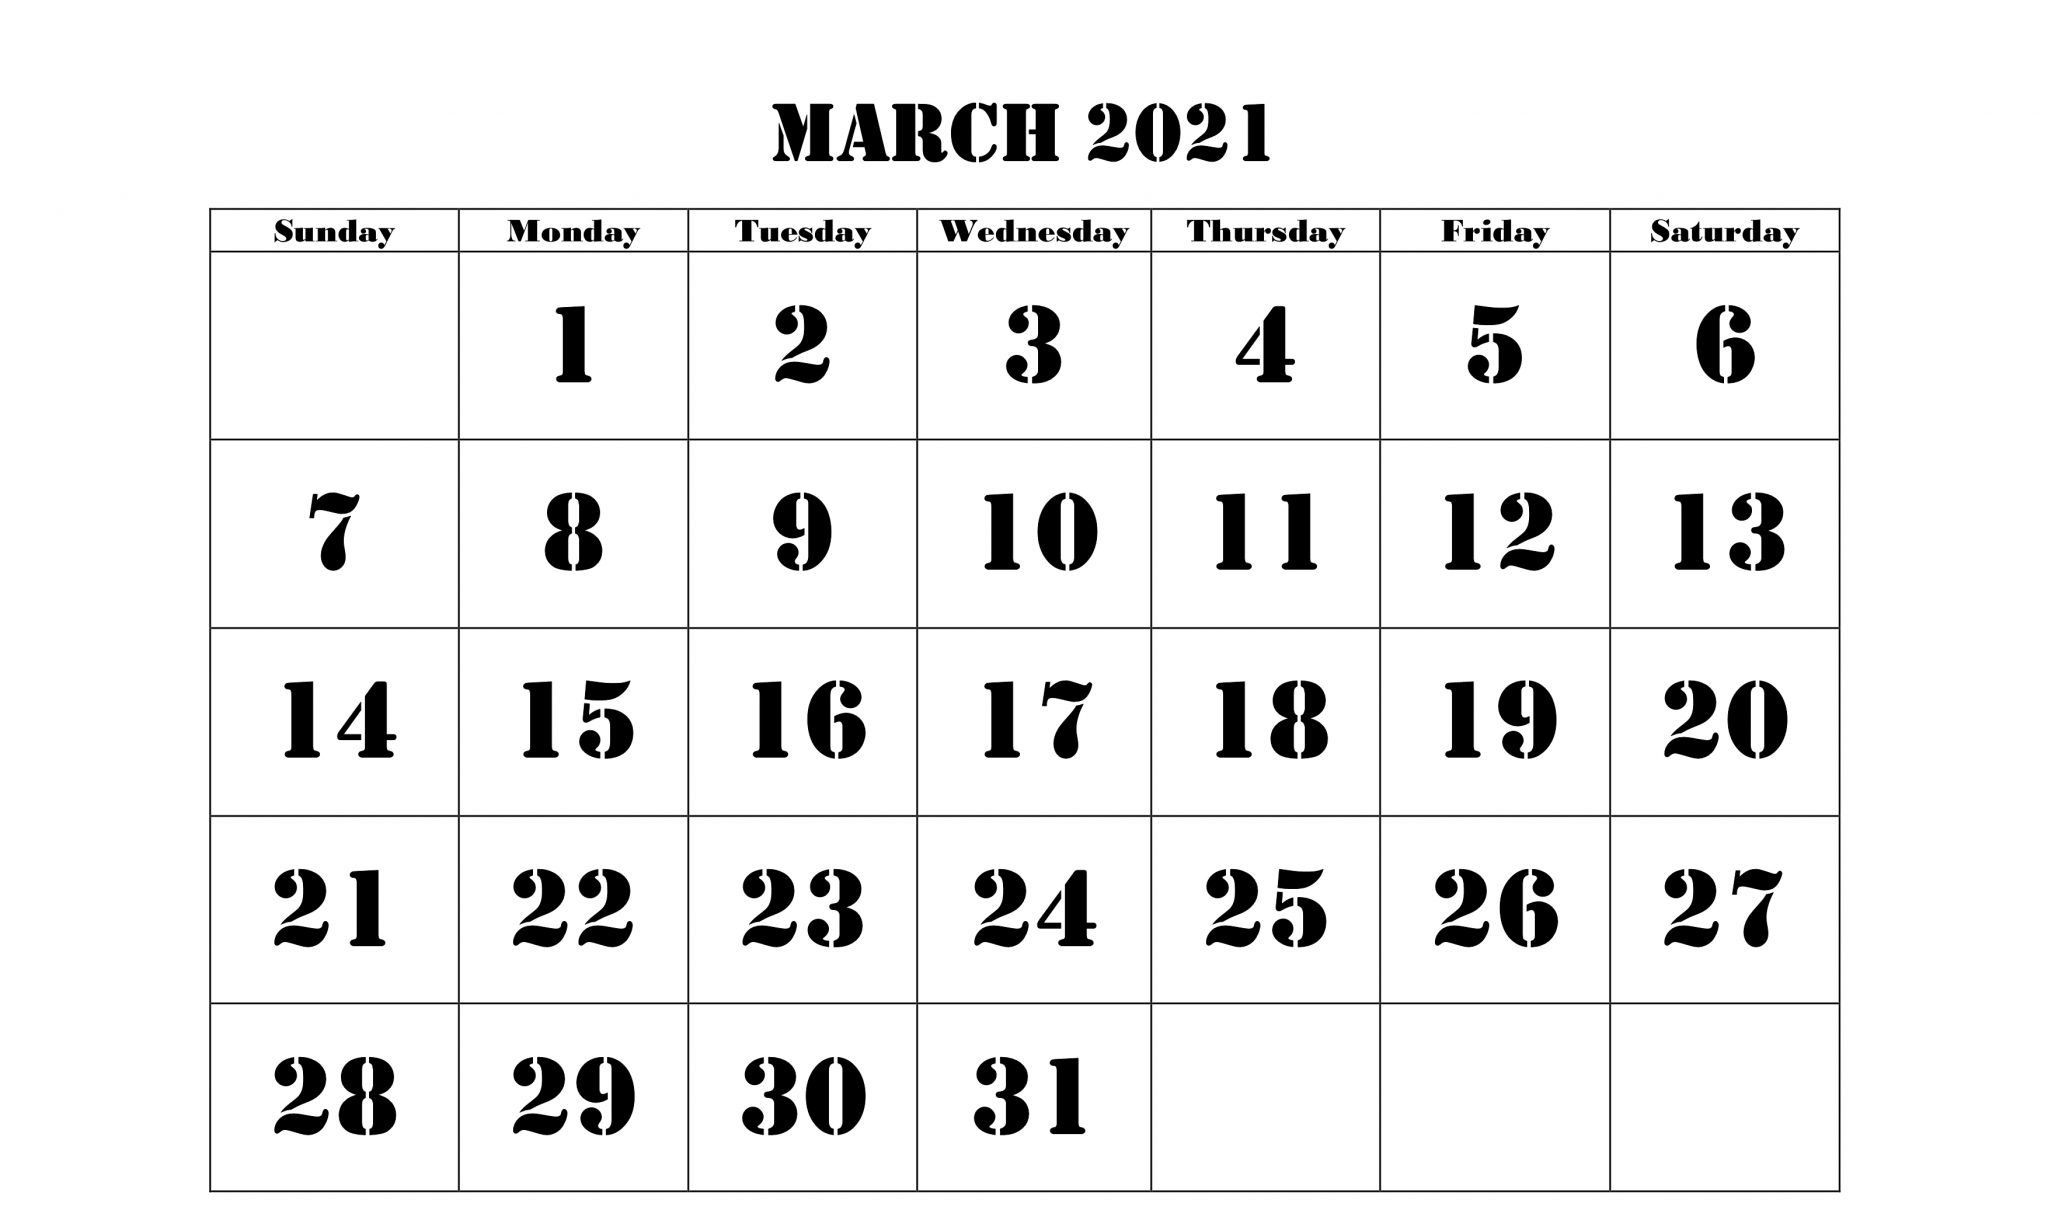 20+ Calendar 2021 Greece - Free Download Printable Calendar From November 2020 To March 2021